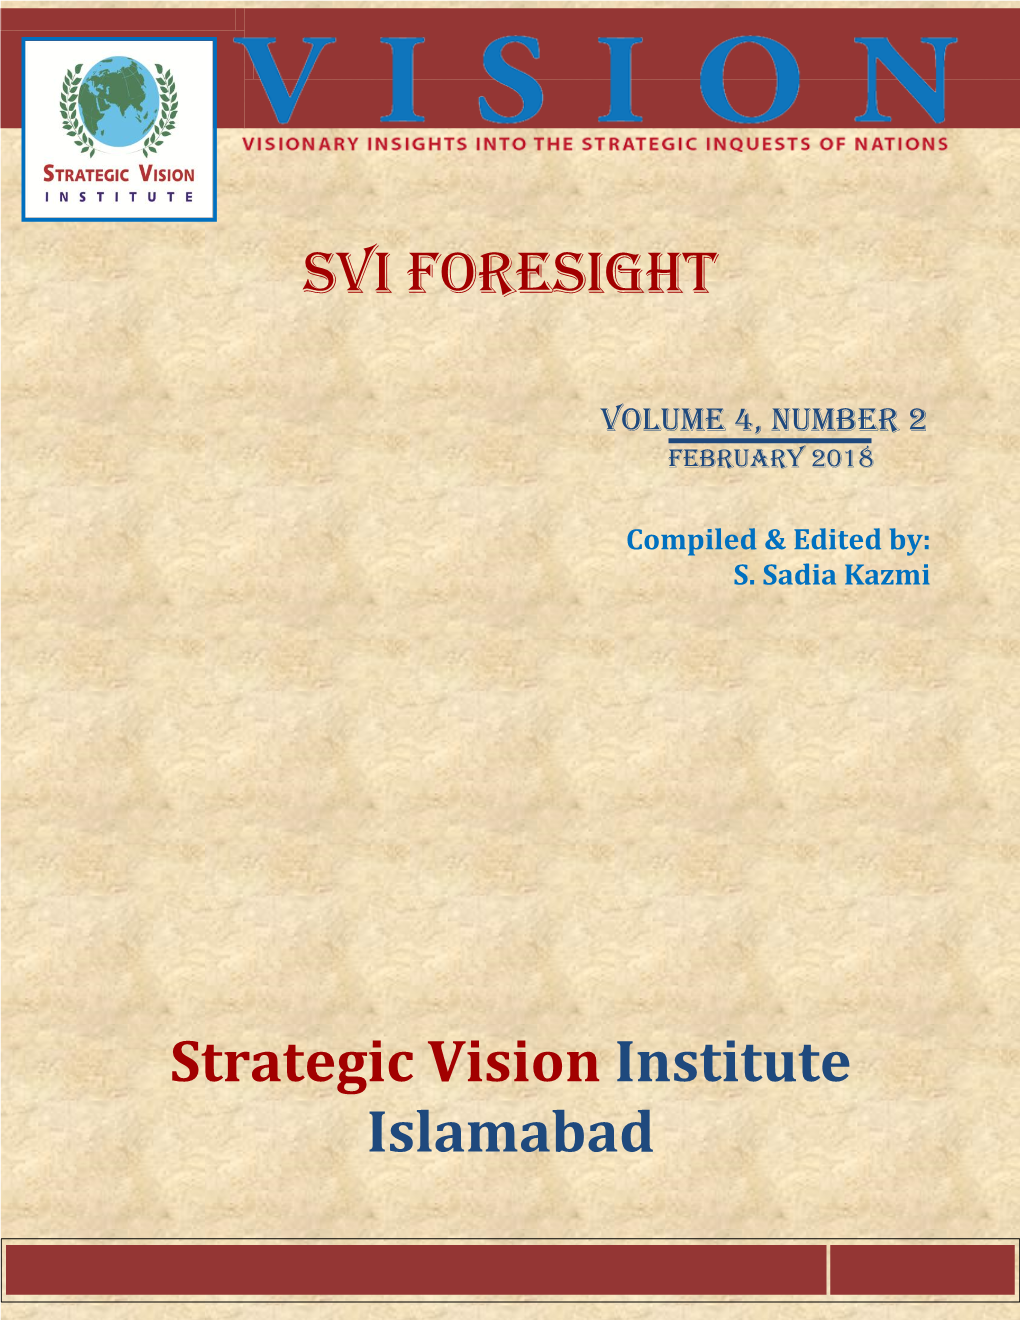 SVI Foresight Strategic Vision Institute Islamabad